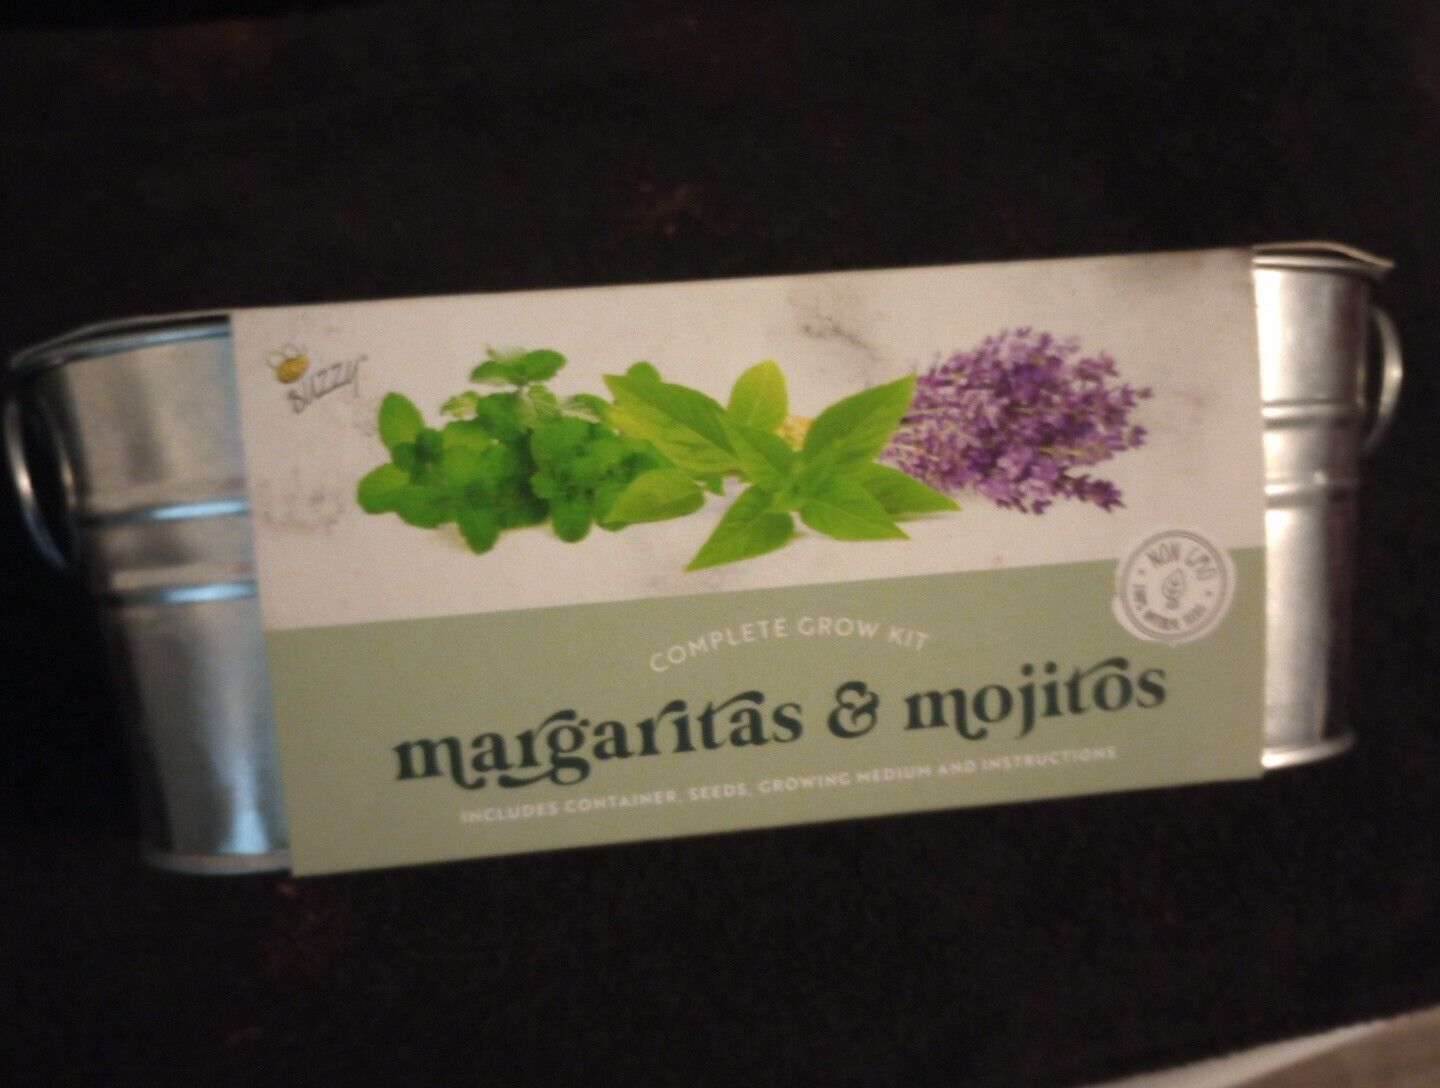 Margaritas & Mojitos Complete Grow Kit